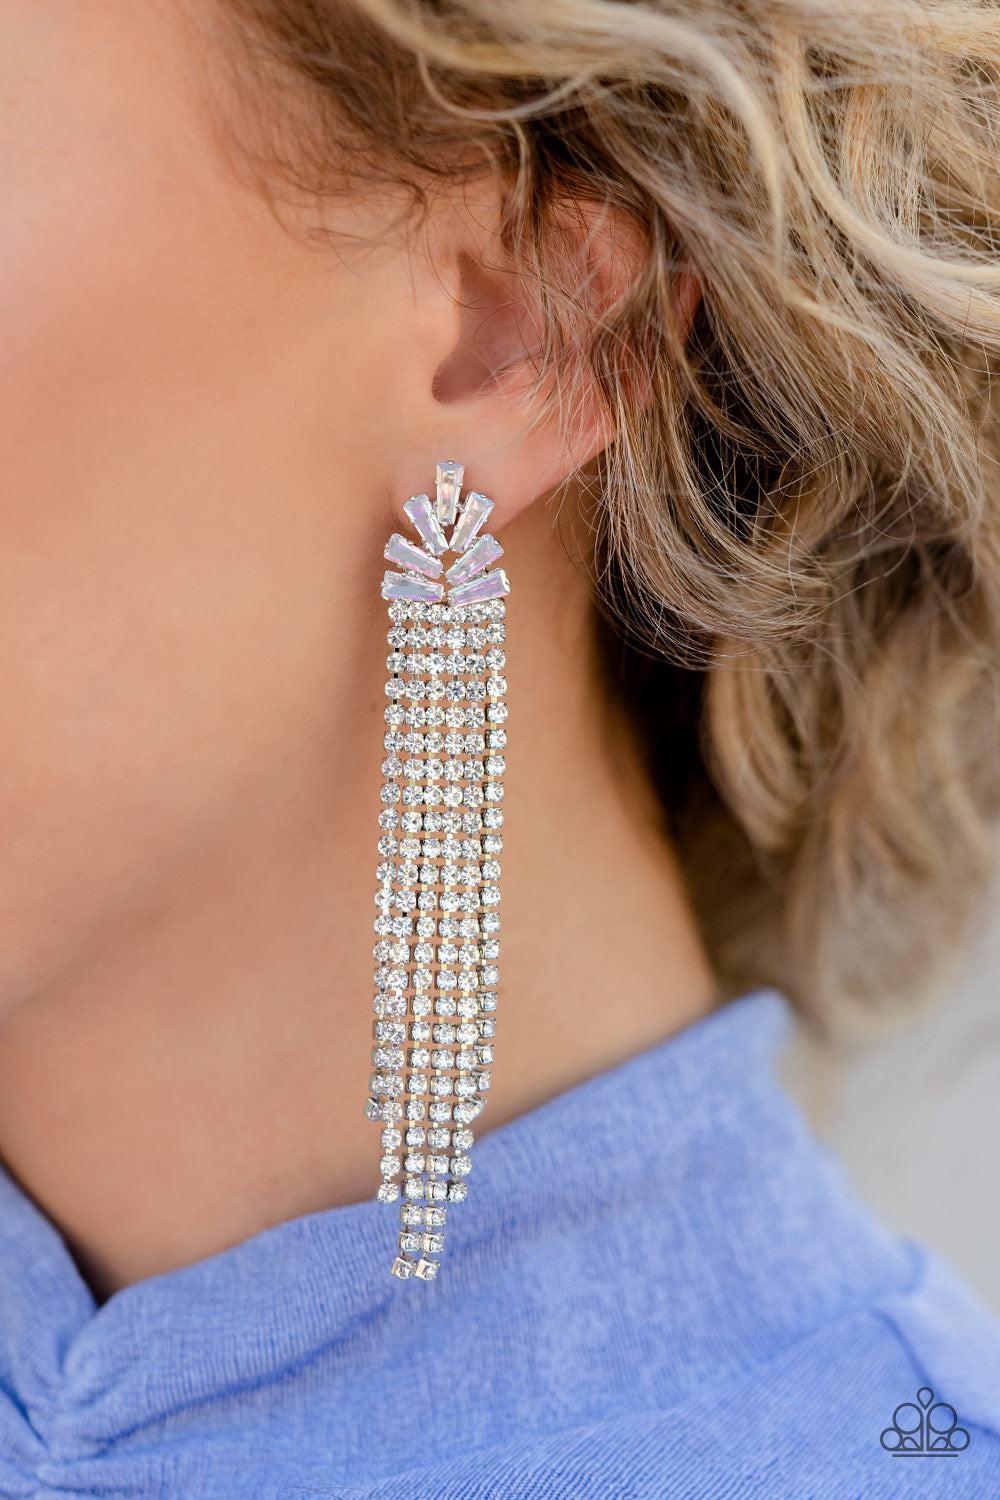 Overnight Sensation Multi Iridescent Rhinestone Earrings - Paparazzi Accessories-on model - CarasShop.com - $5 Jewelry by Cara Jewels